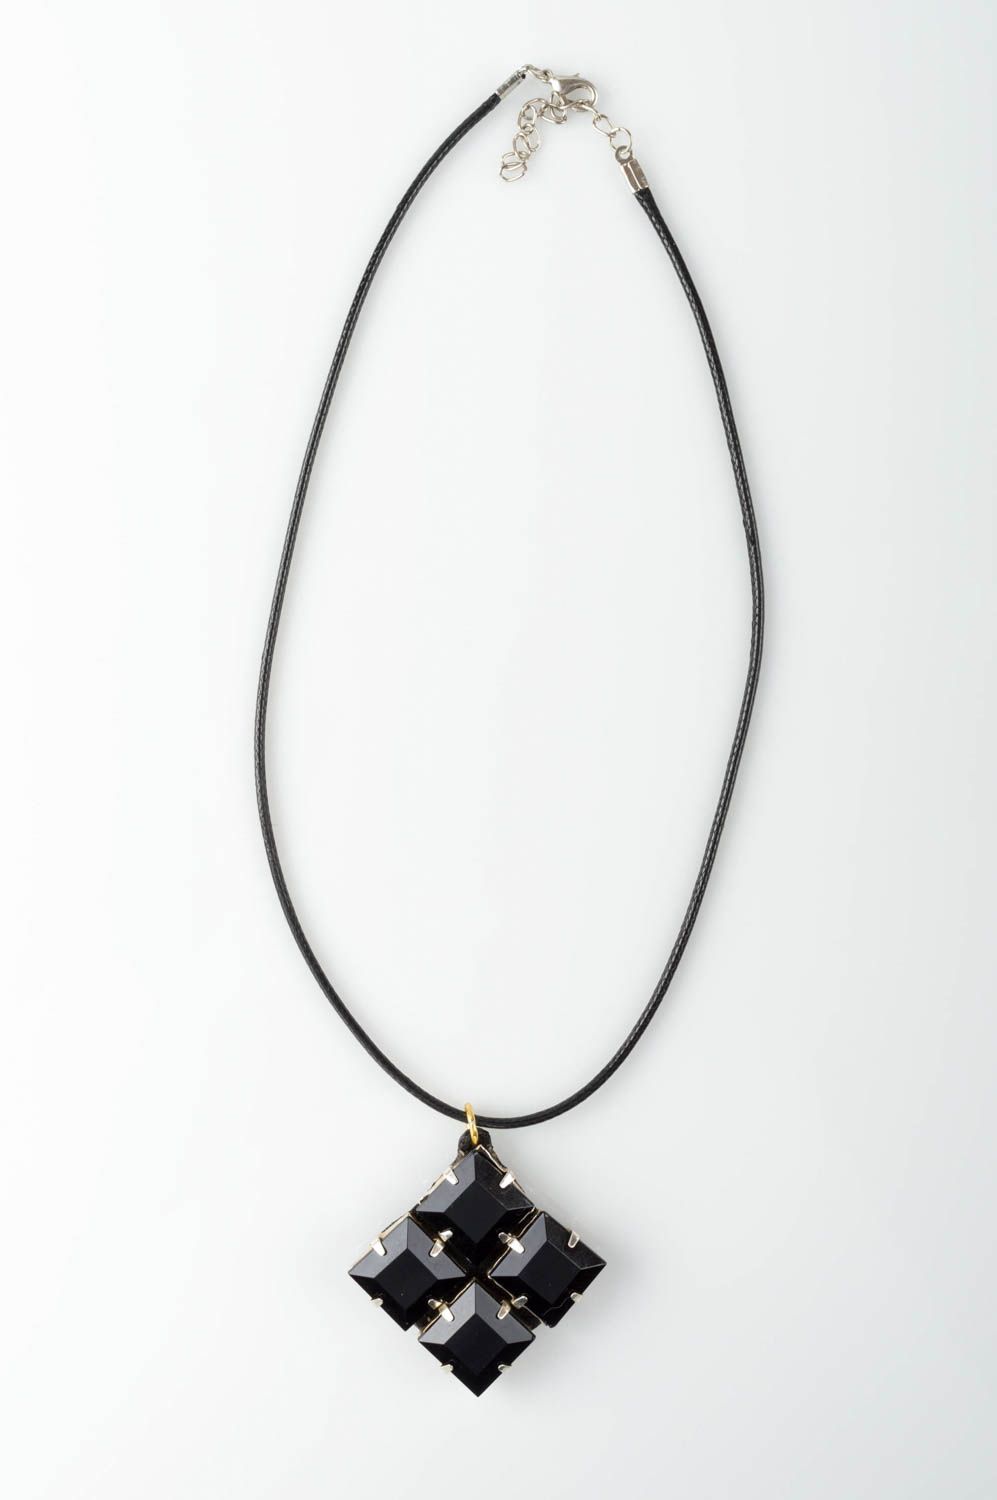 Handmade beautiful pendant unusual necklace made of plastic beads cute accessory photo 2